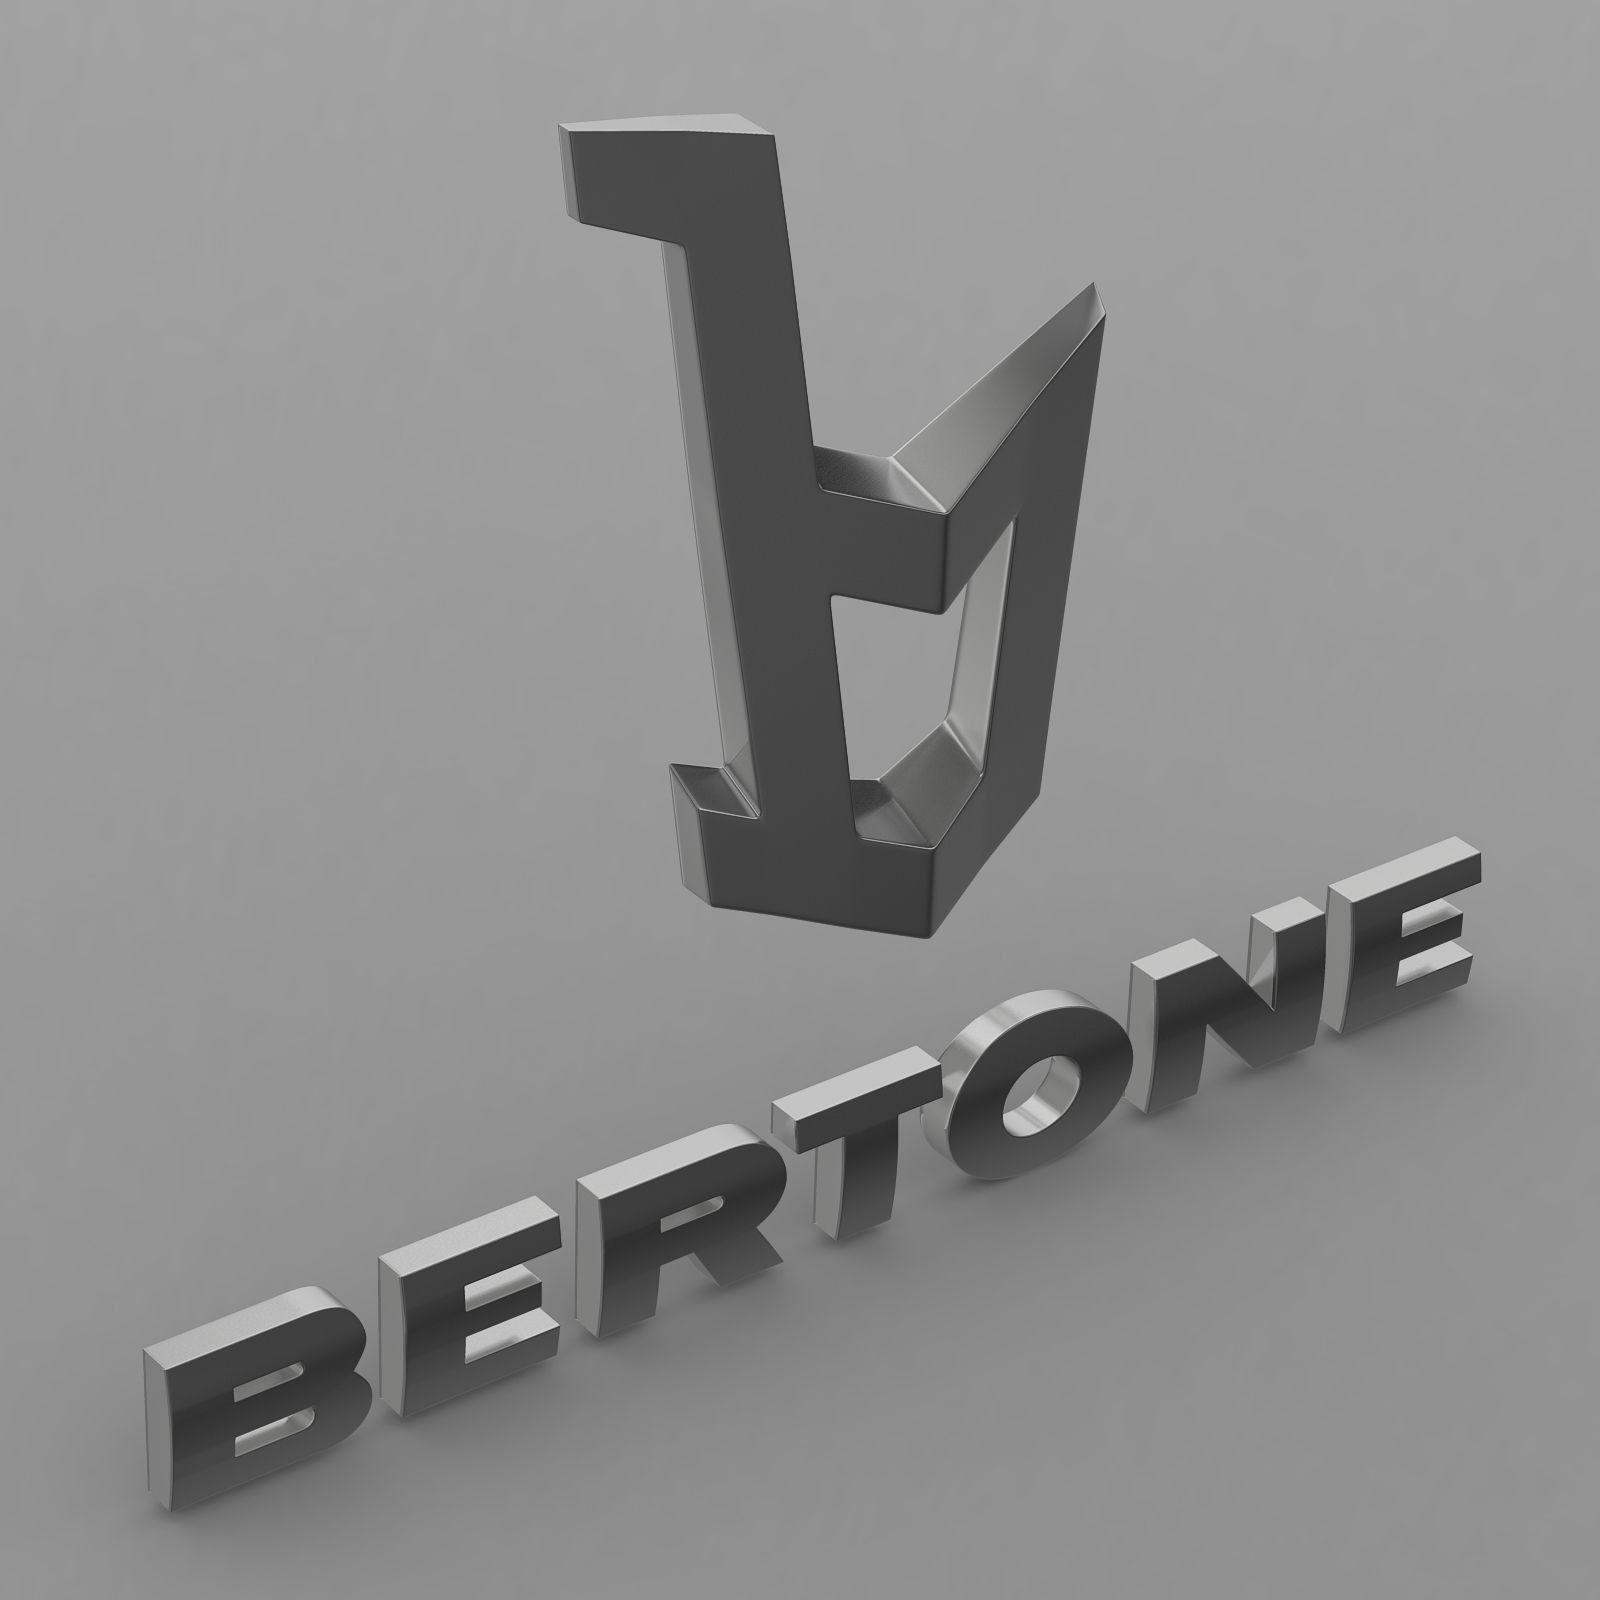 Bertone Car Logo - 3D model bertone logo | CGTrader